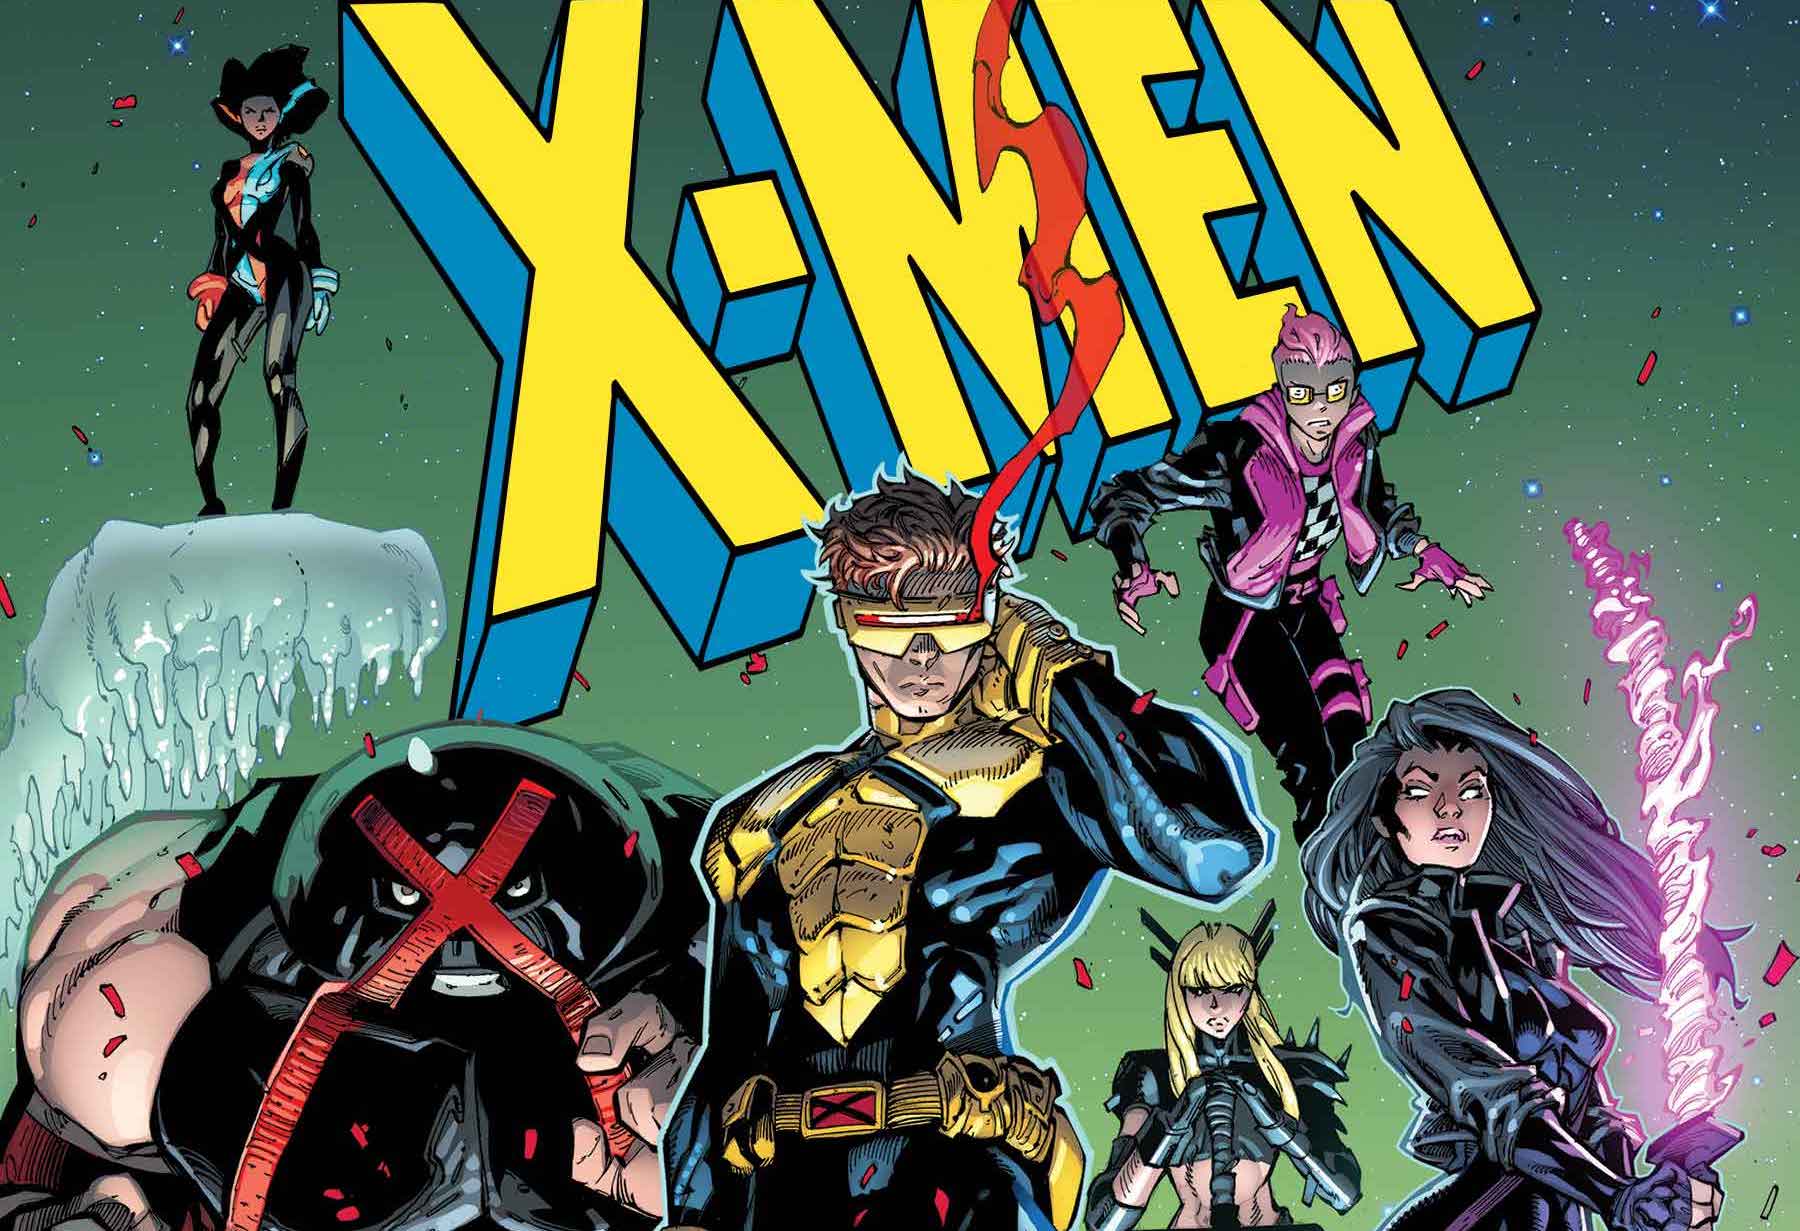 EXCLUSIVE Marvel Preview: X-Men #1